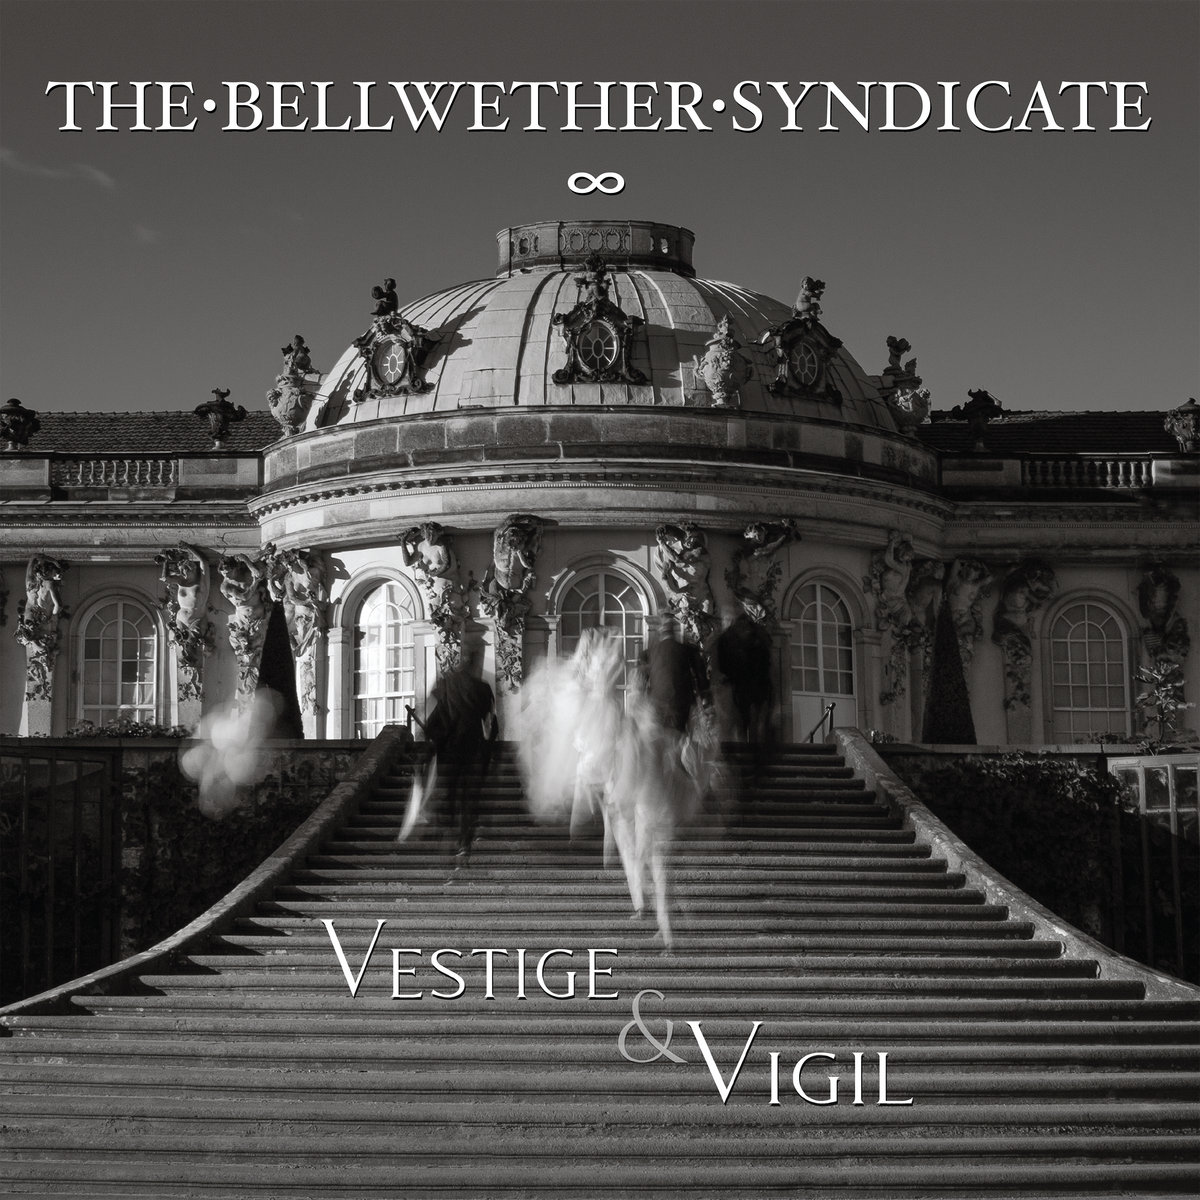 The Bellwether Syndicate, “Vestige & Vigil”